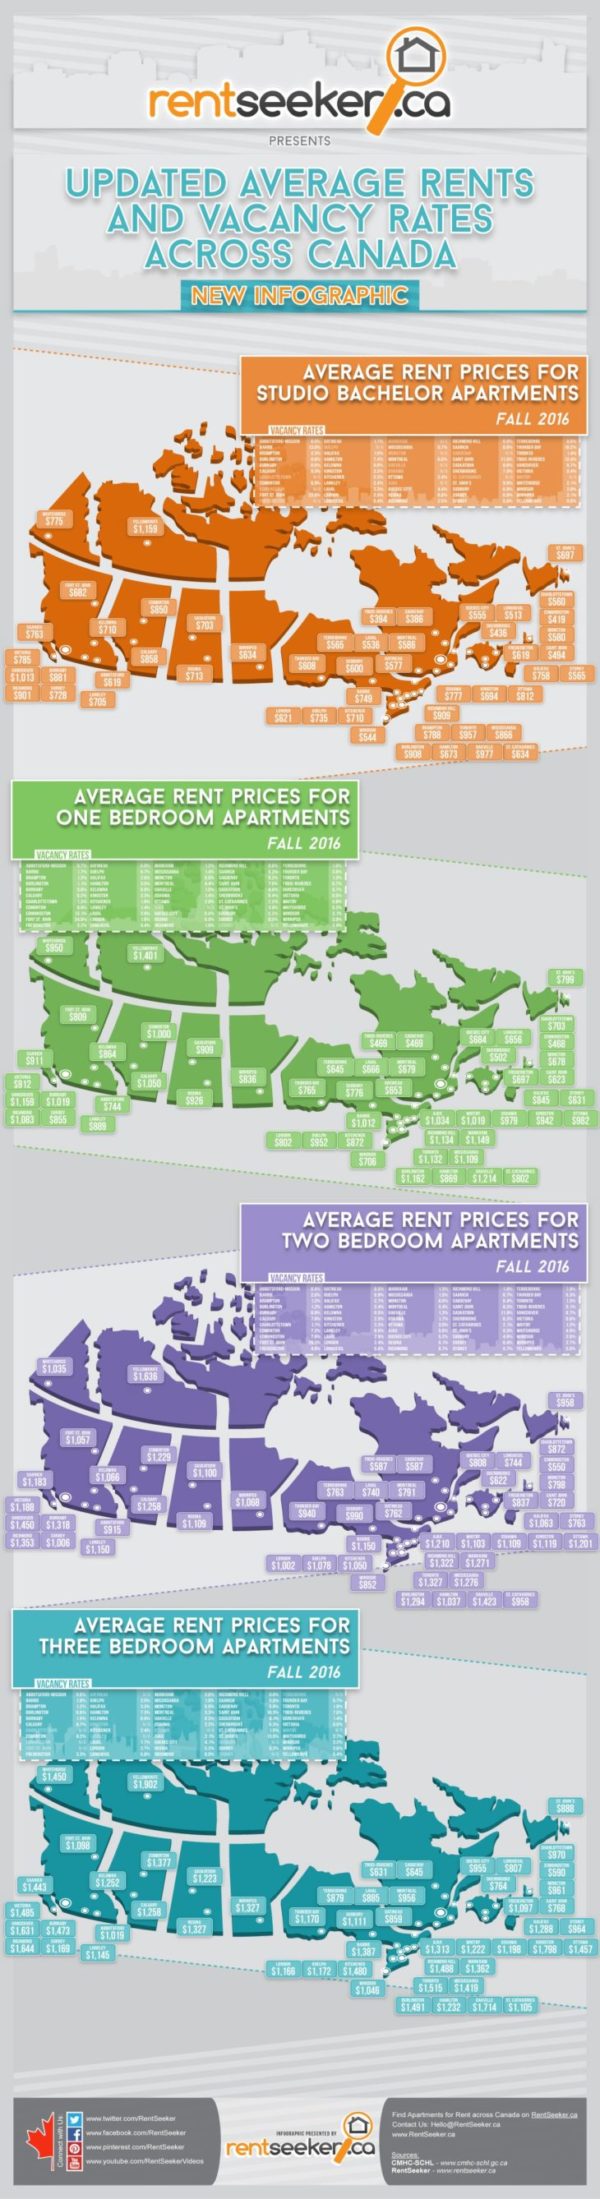 Average rents in markets across Canada